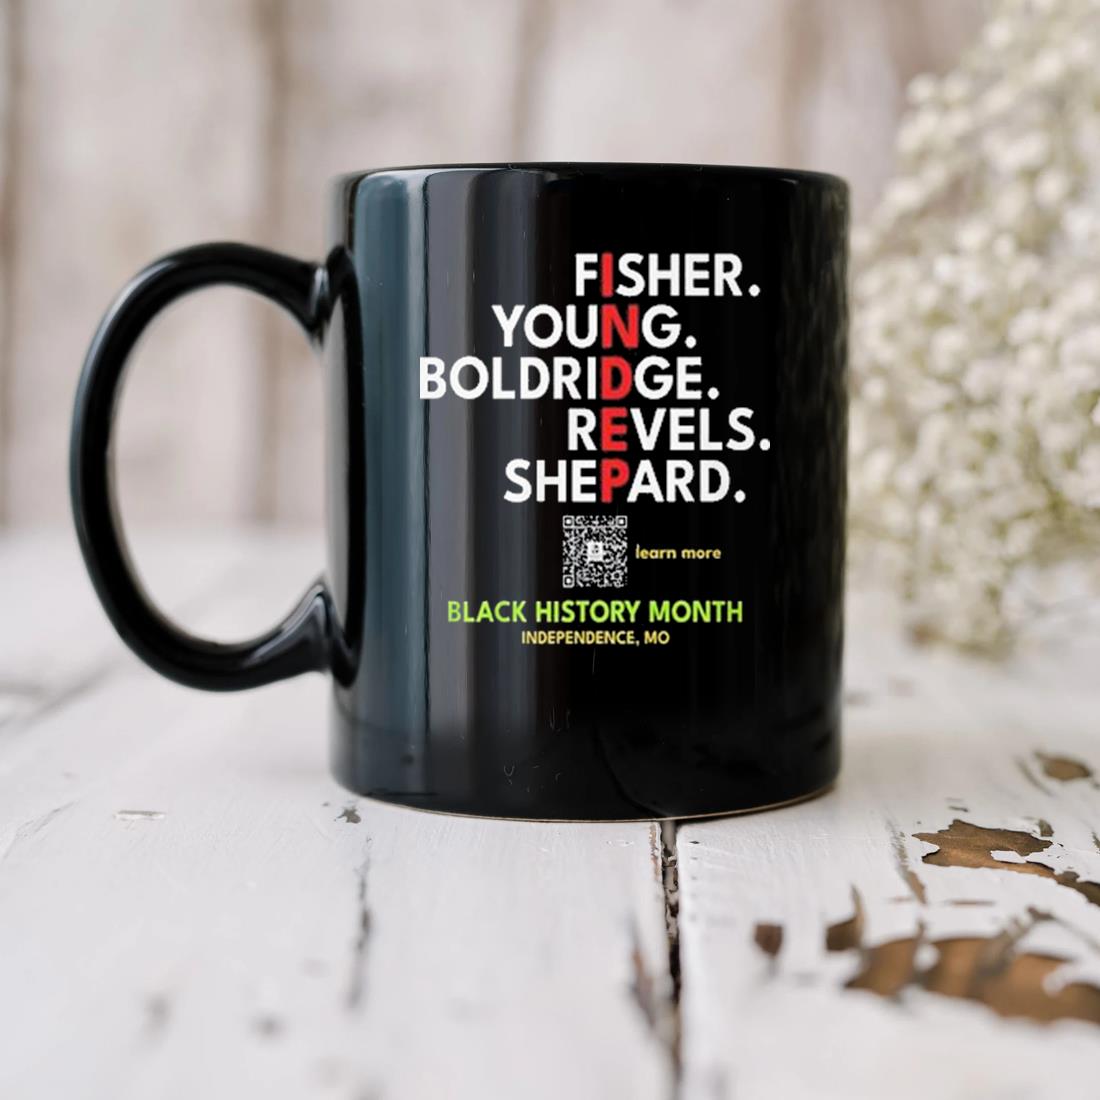 Fisher Young Boldridge Revels Shepard Mug